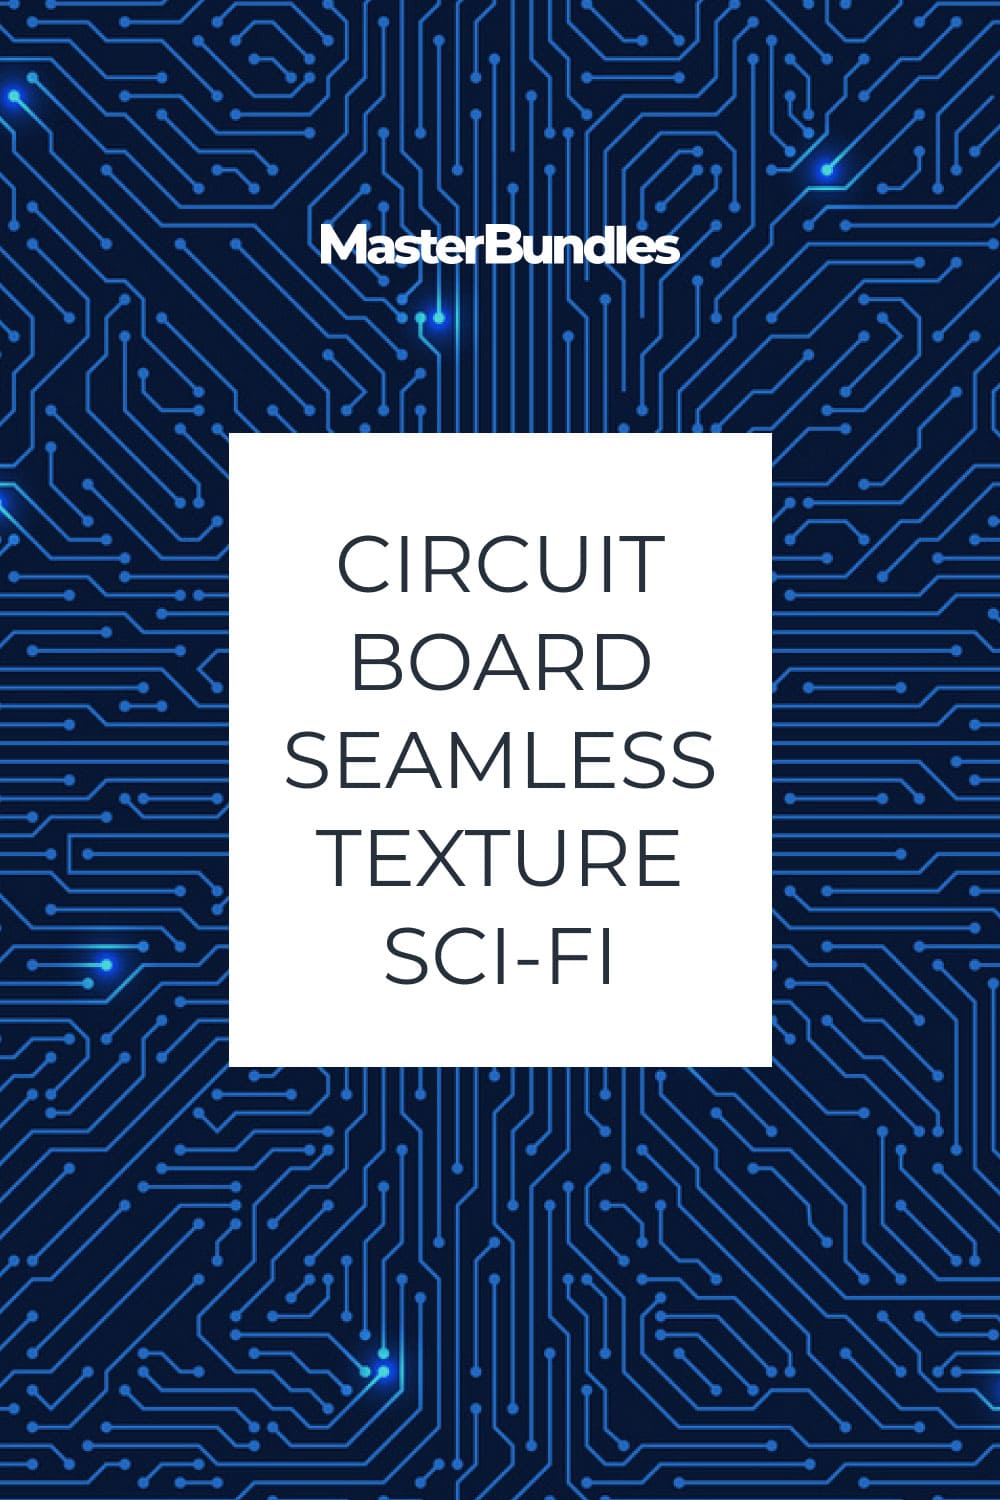 Circuit board seamless texture.